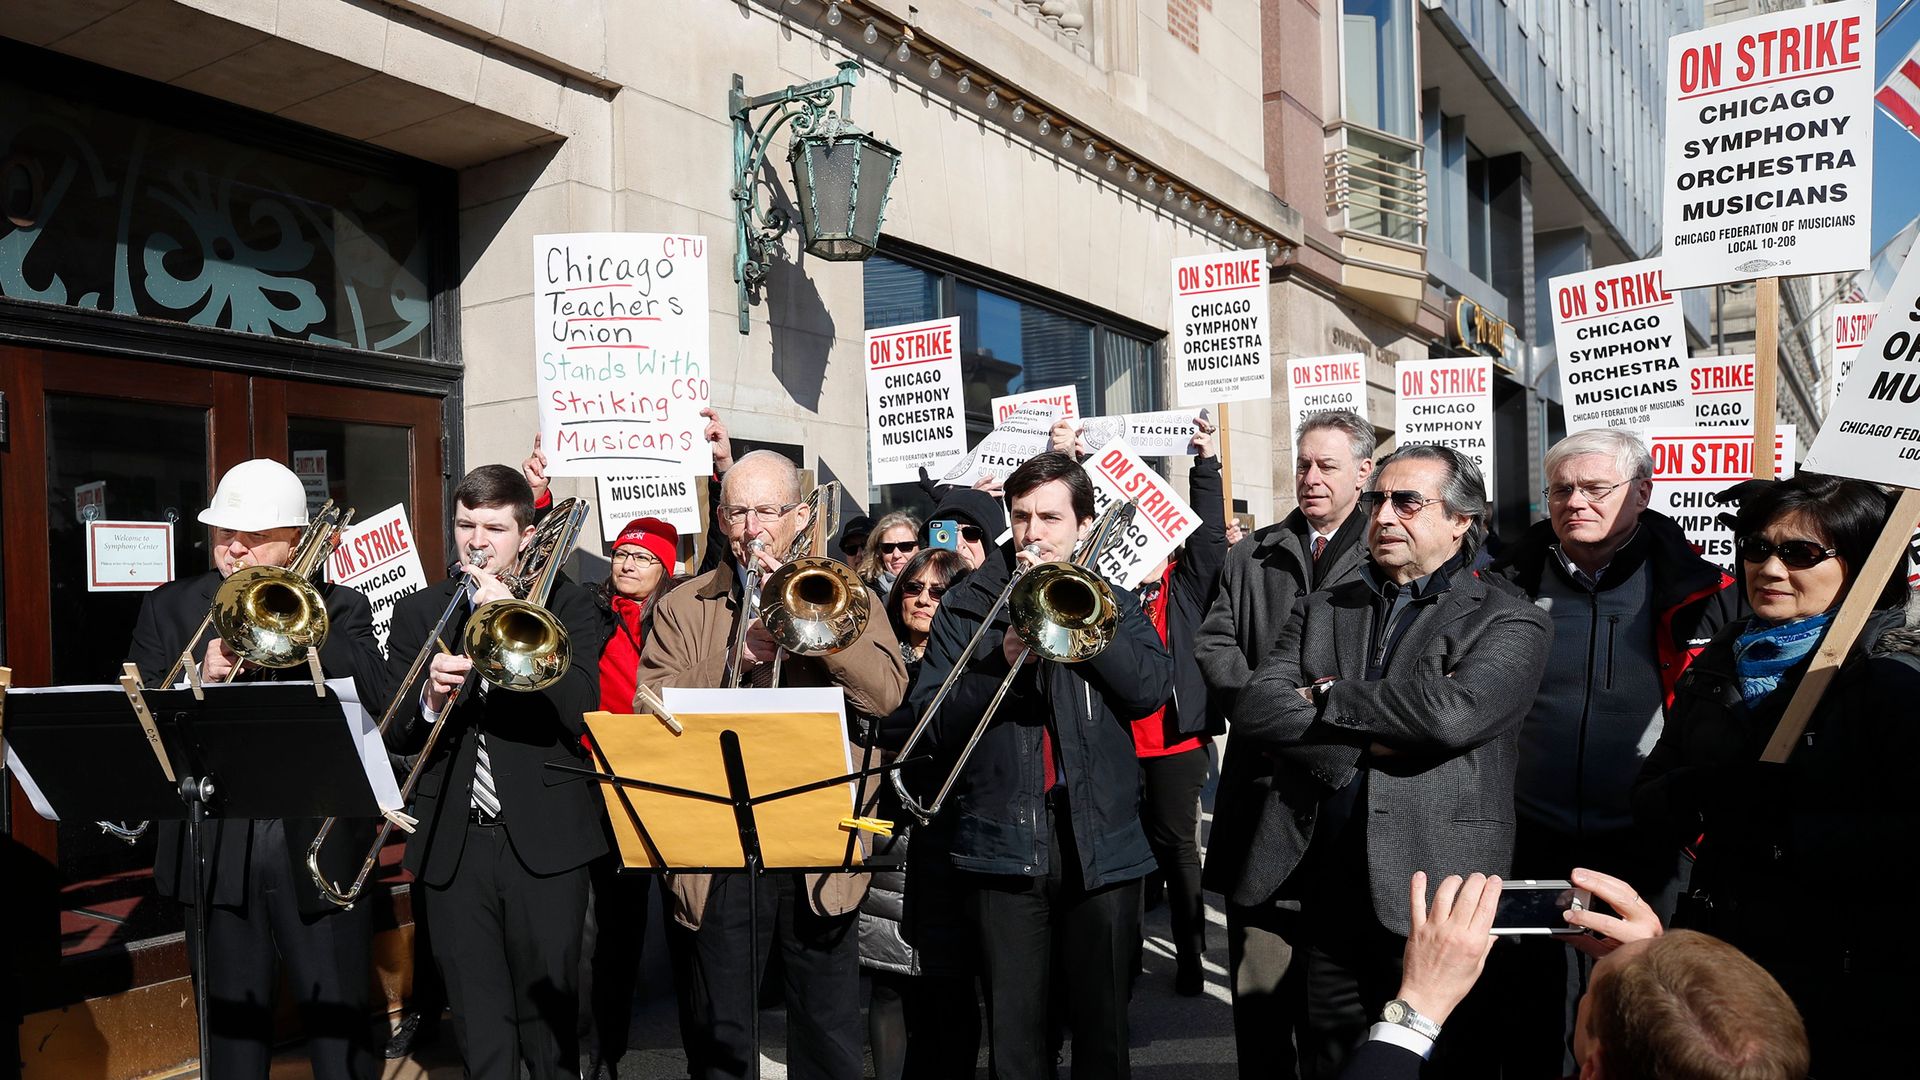 Chicago symphony musicians strike